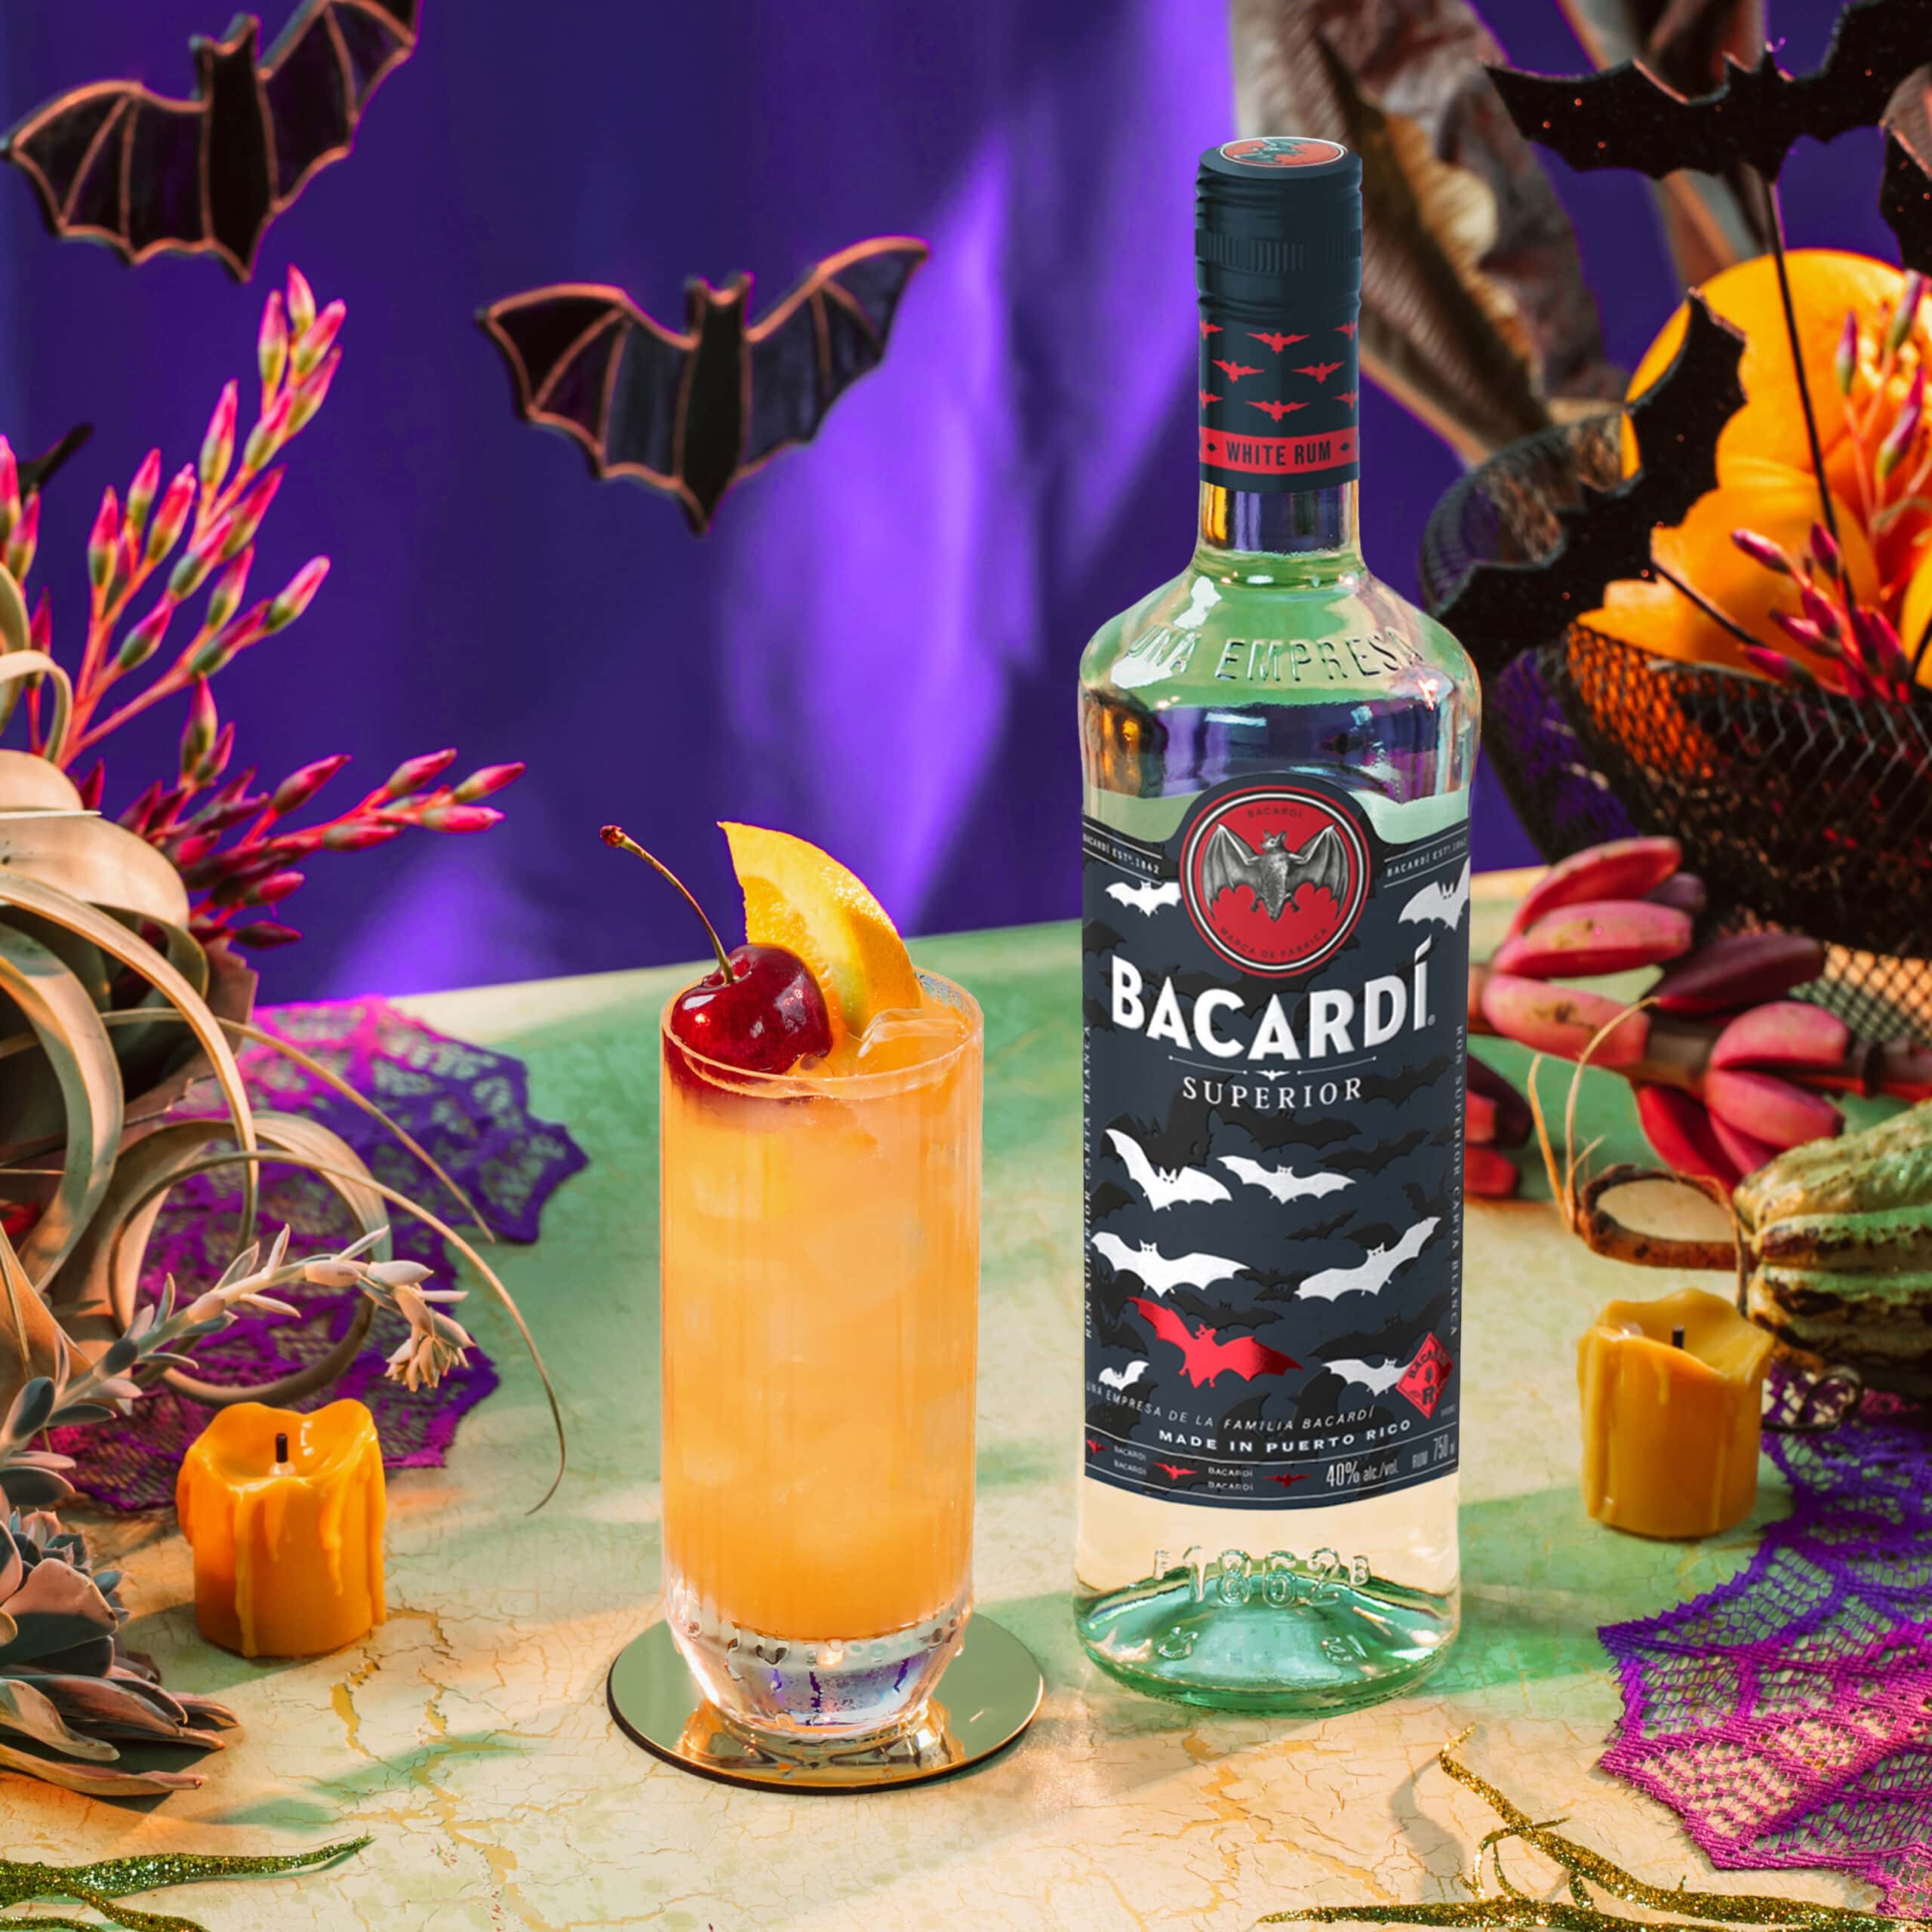 orage cocktail next to Bacardi Halloween bottle